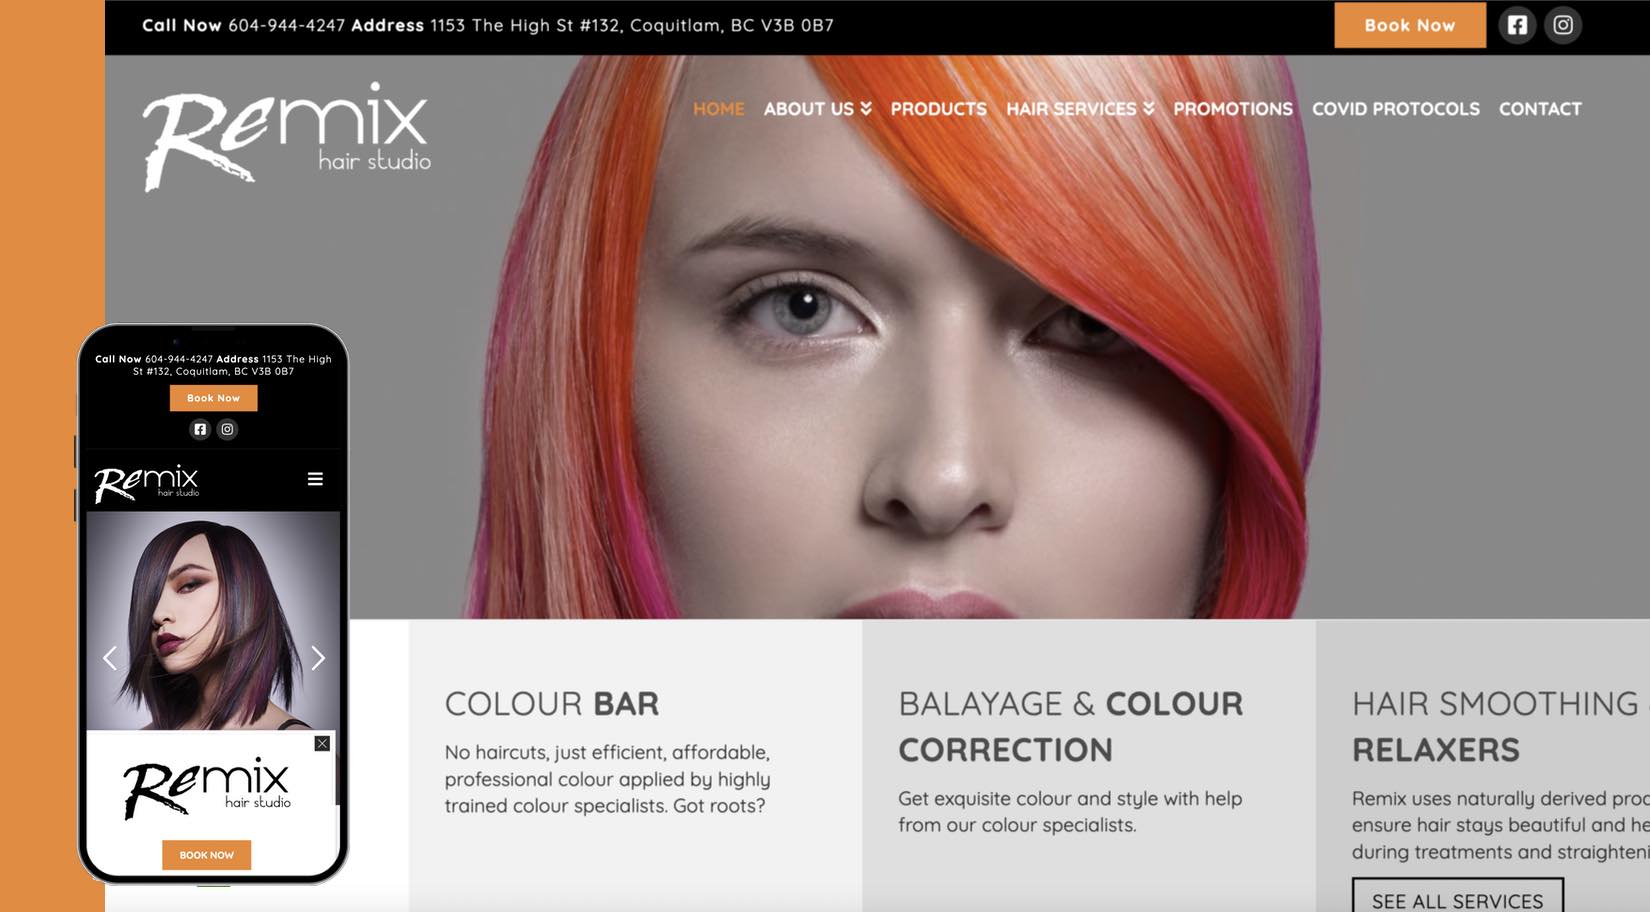 Website Design for coquitlam hair salon